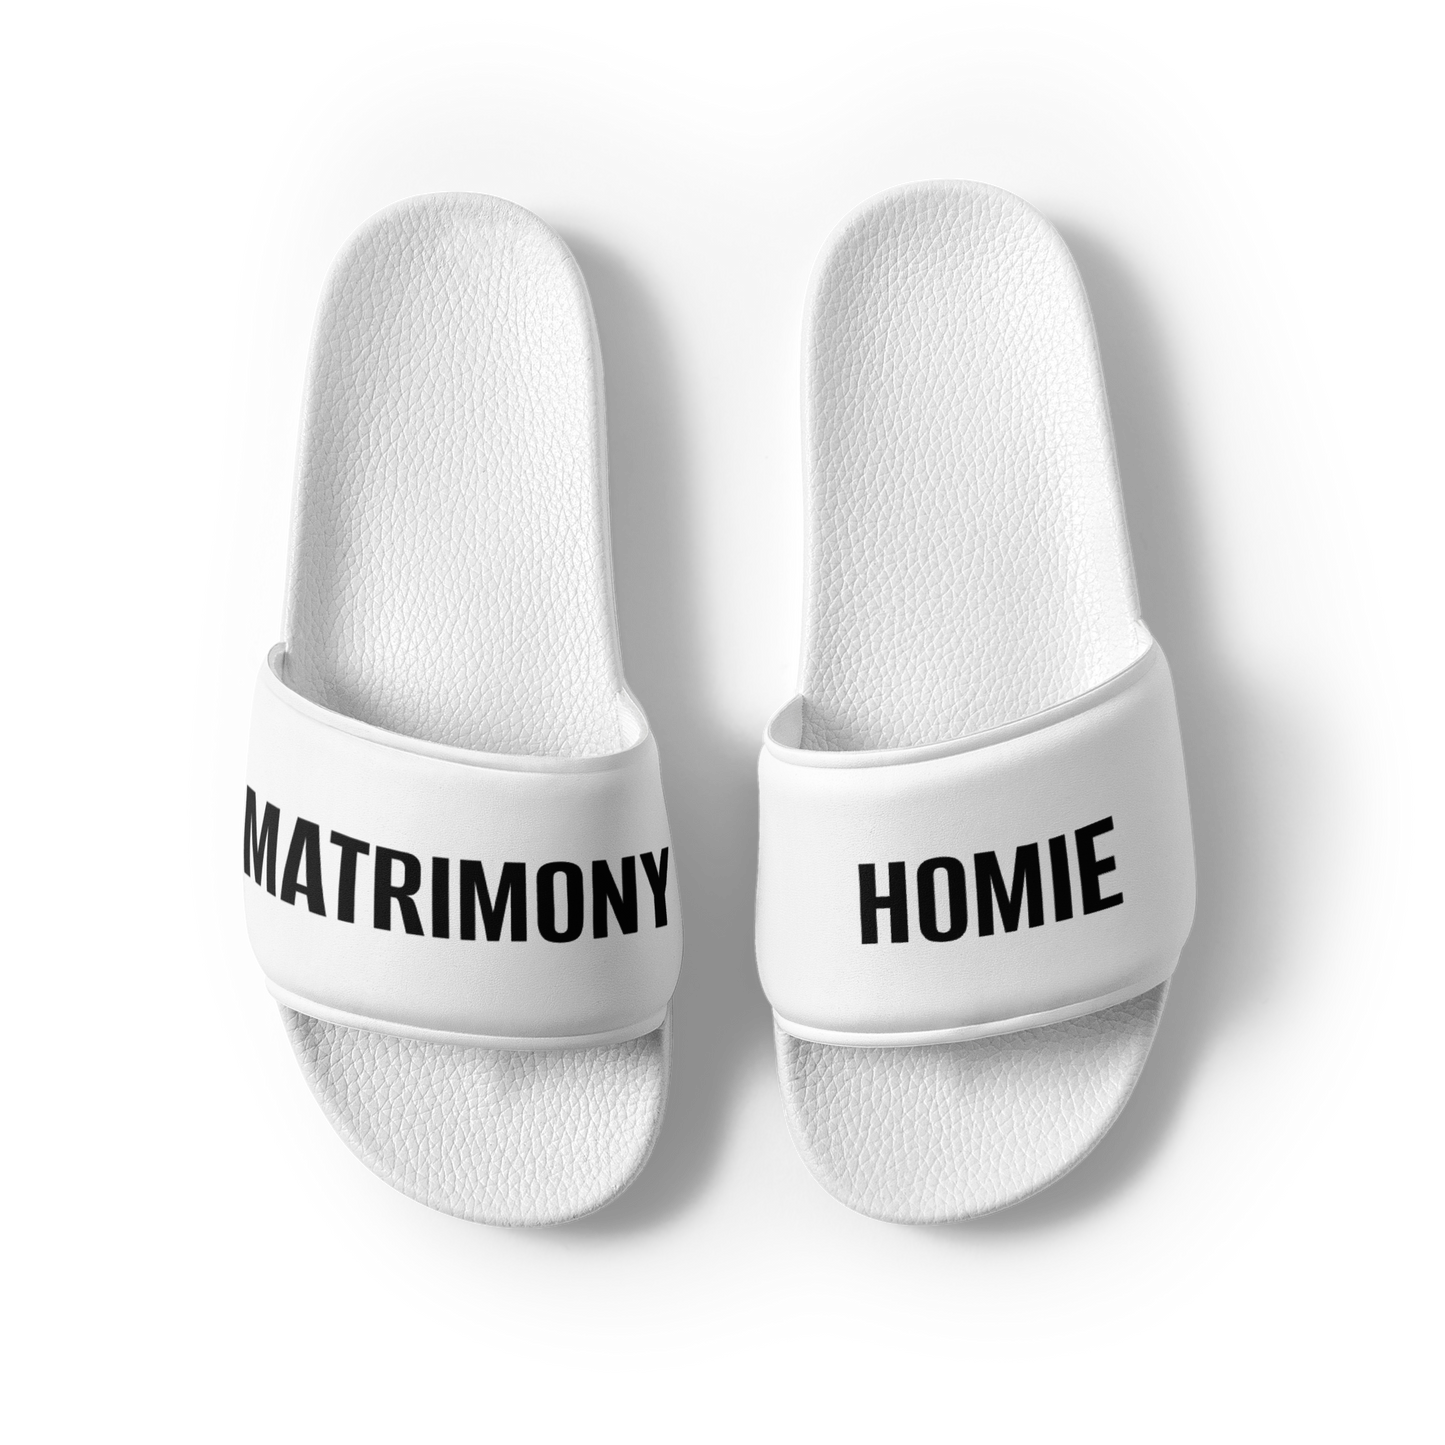 Matrimony Homie Men’s slides